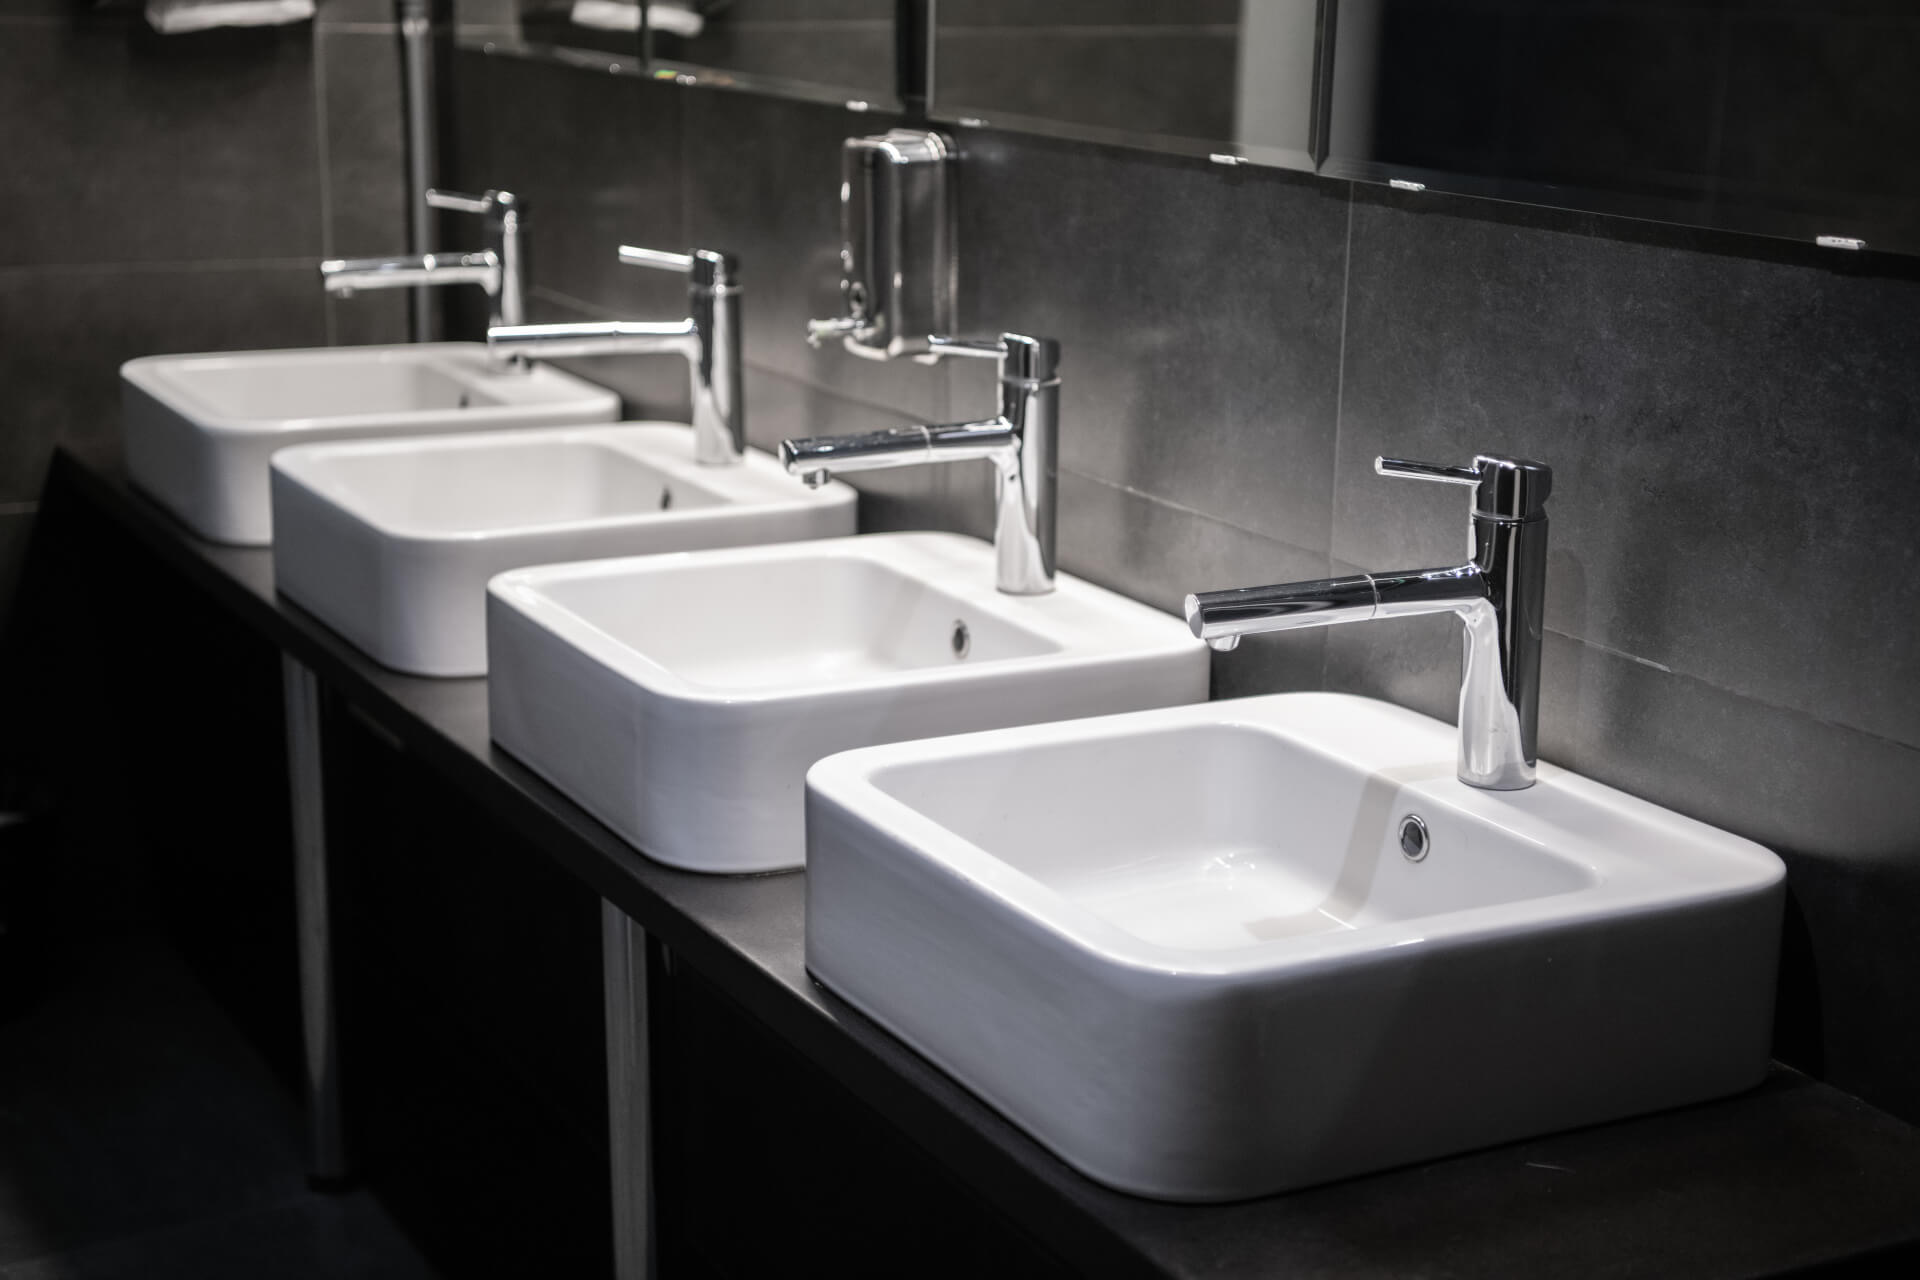 modern sinks with mirror in public toilet 2021 08 26 15 53 34 utc 1